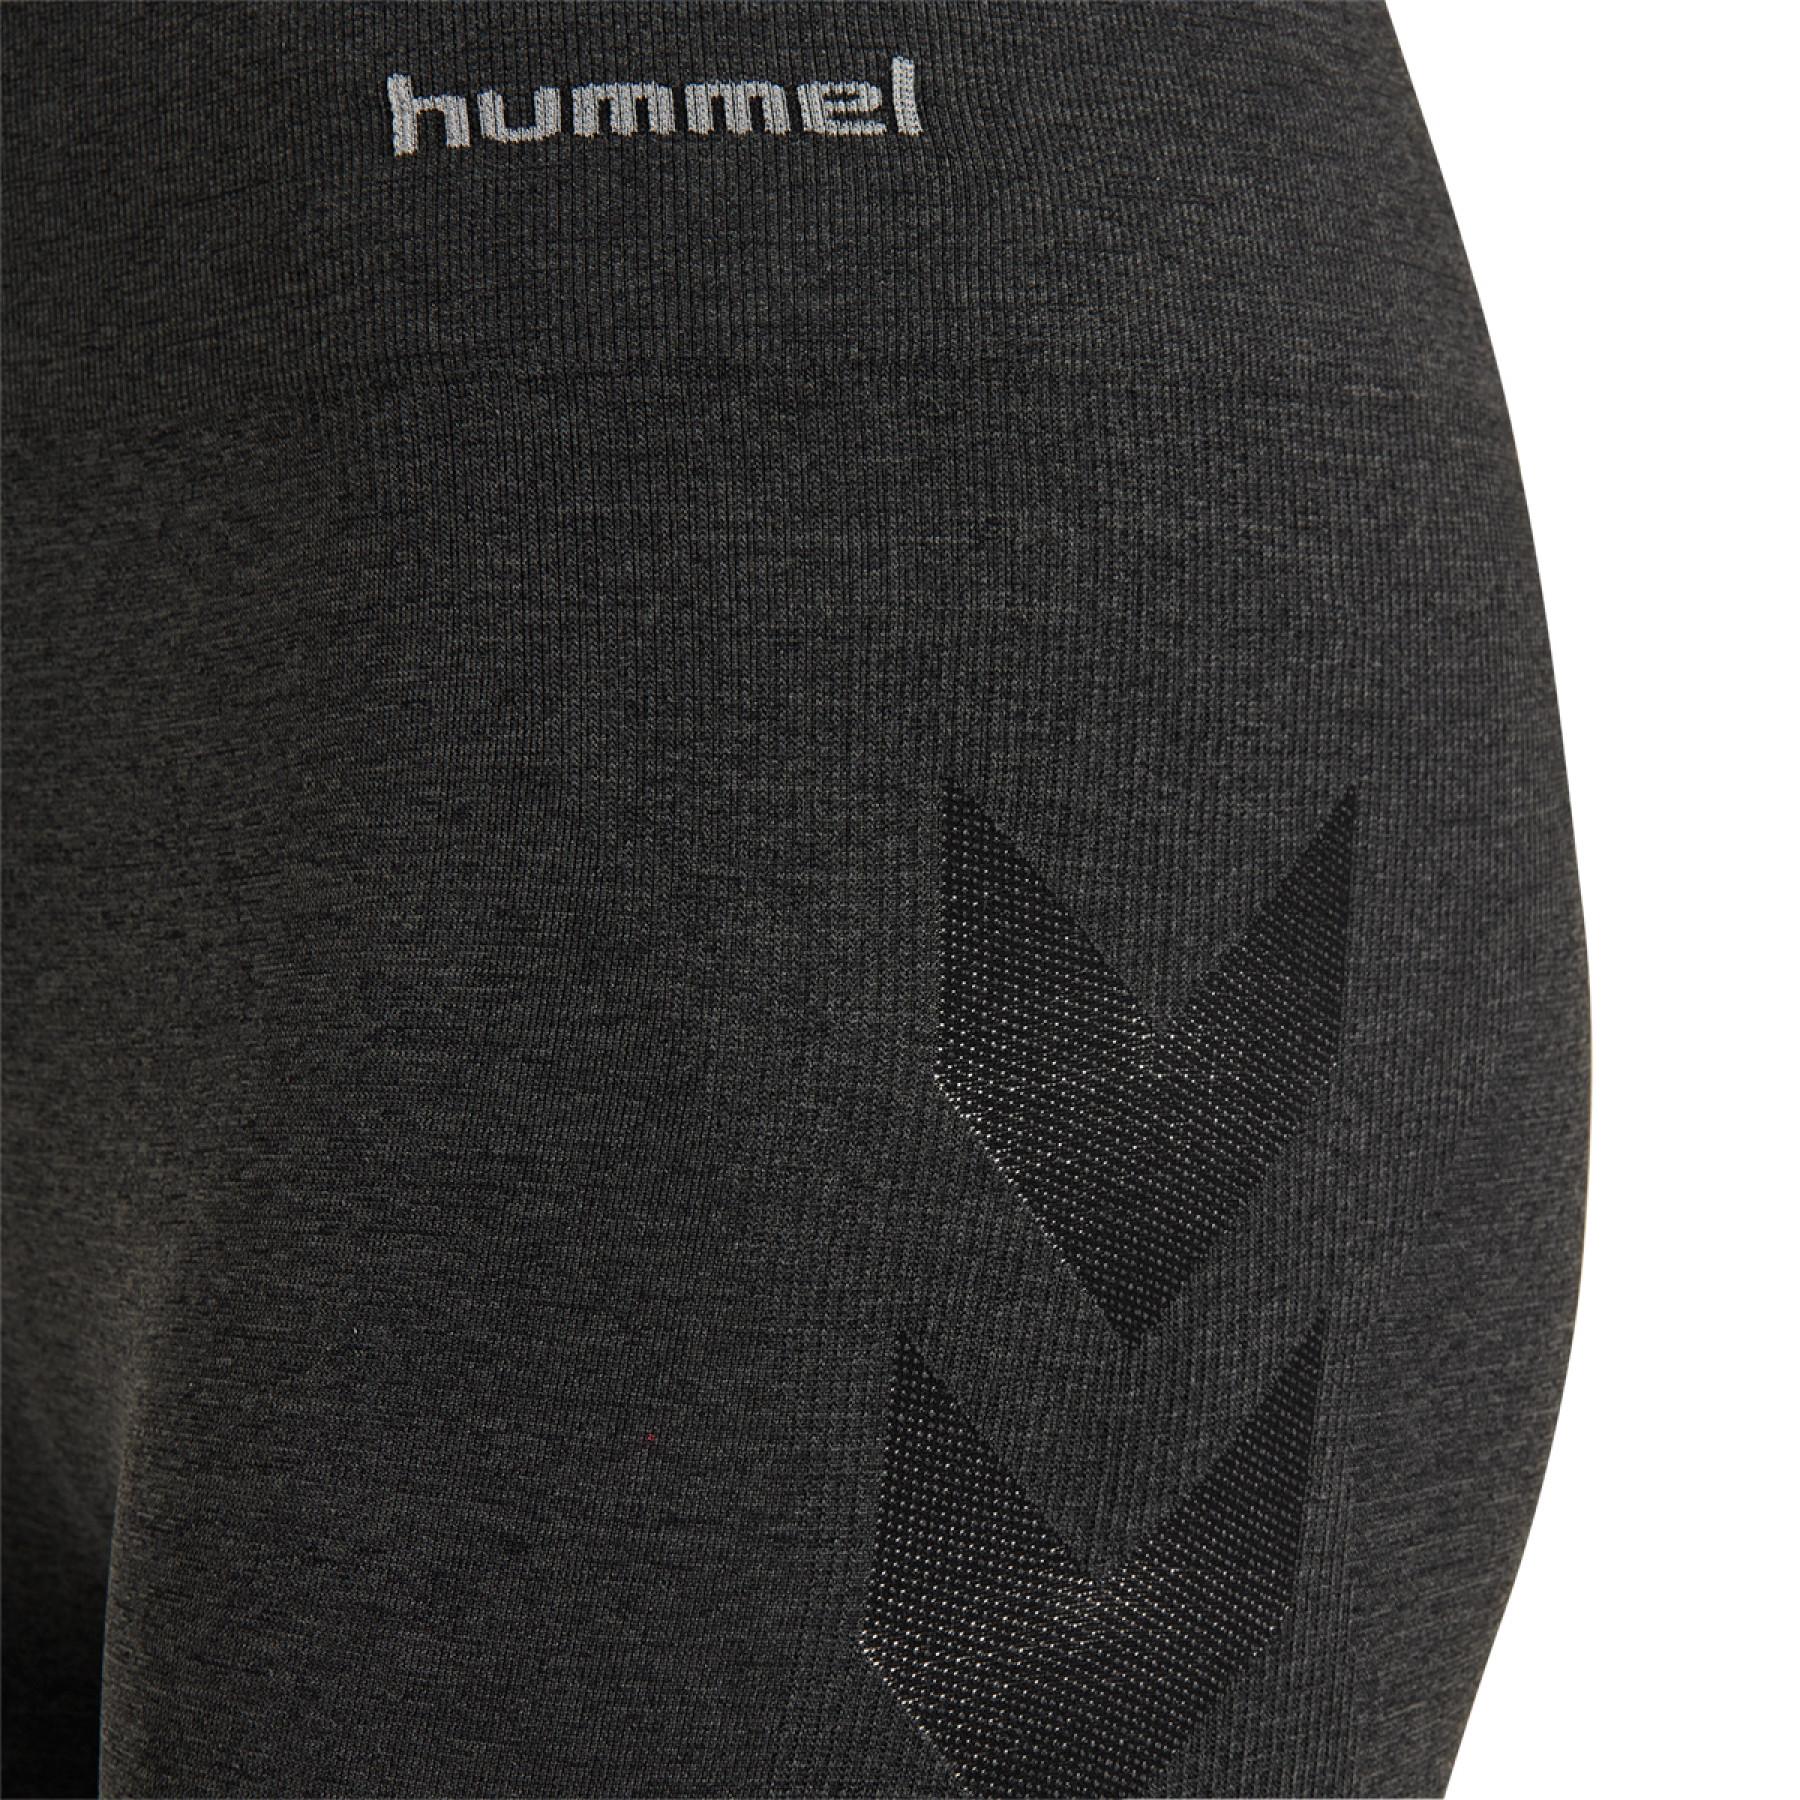 Short Hummel hmlci seamless cycling